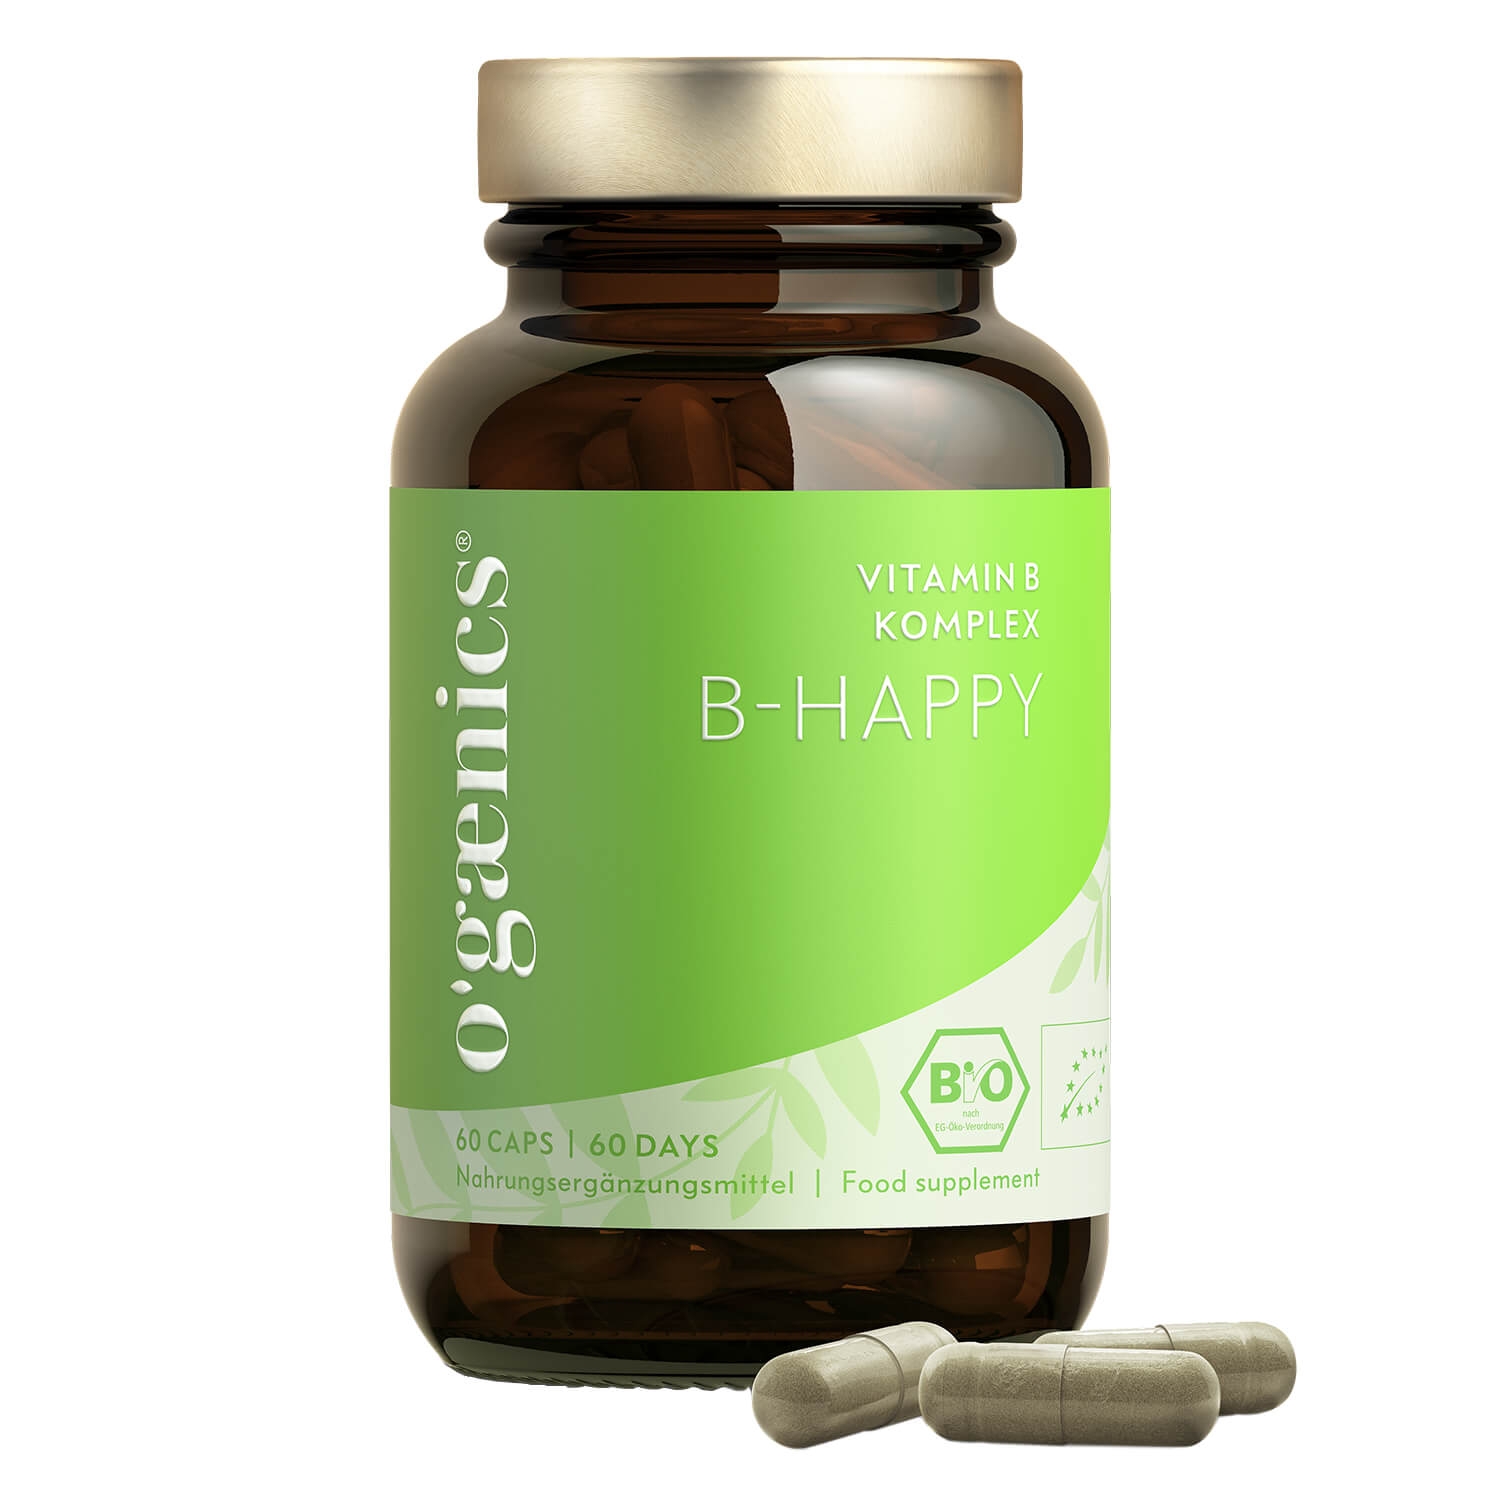 Produktbild von Ogaenics - B-Happy Vitamin B-Komplex